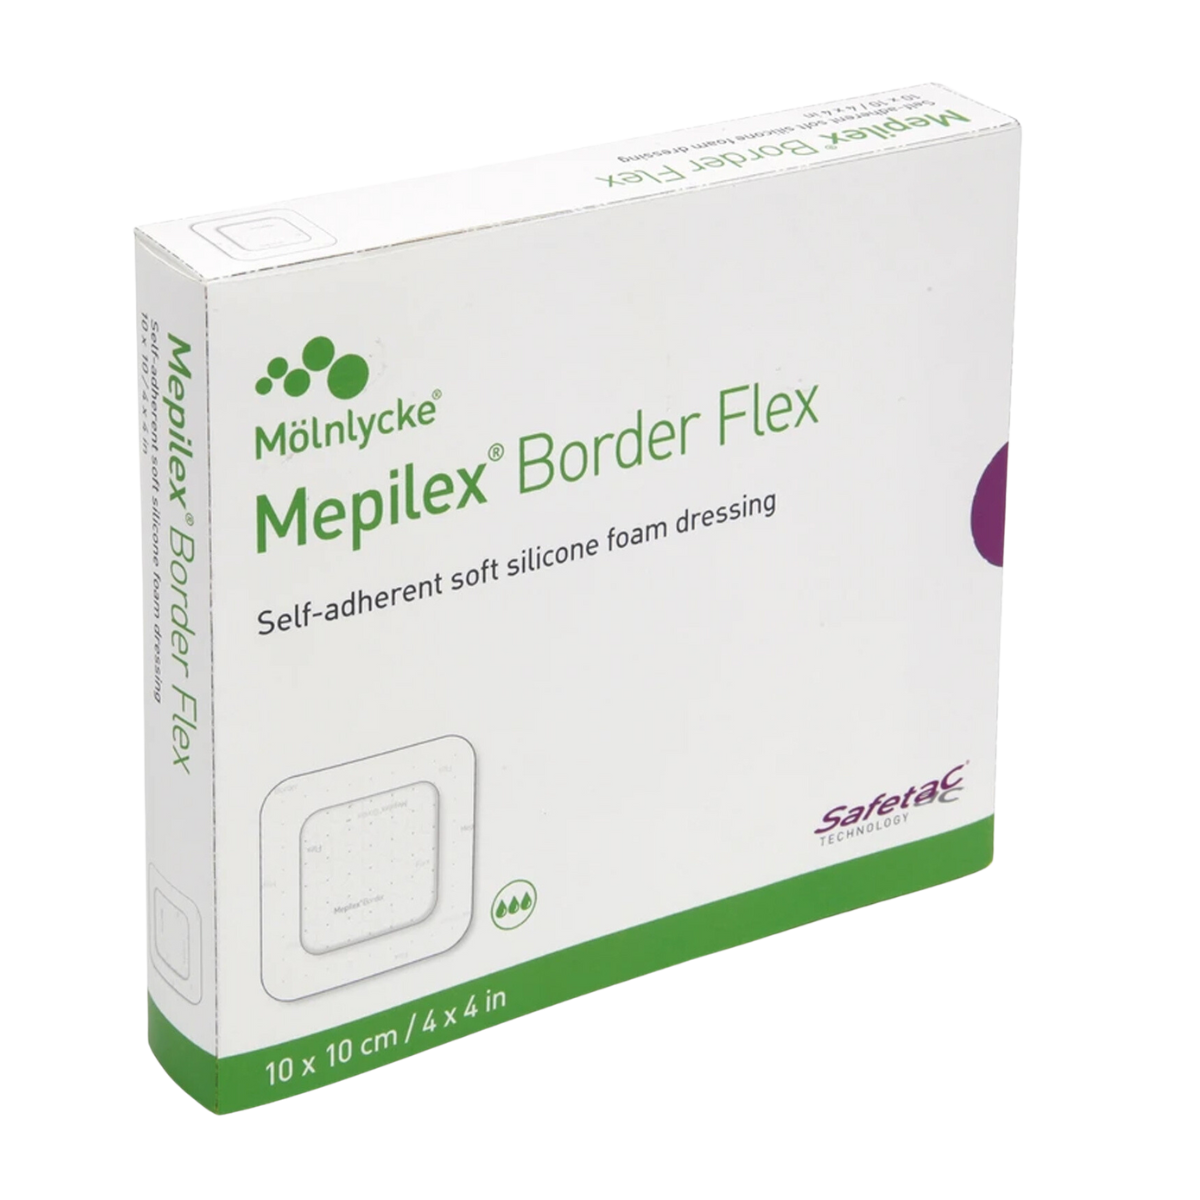 Mepilex® Border Flex